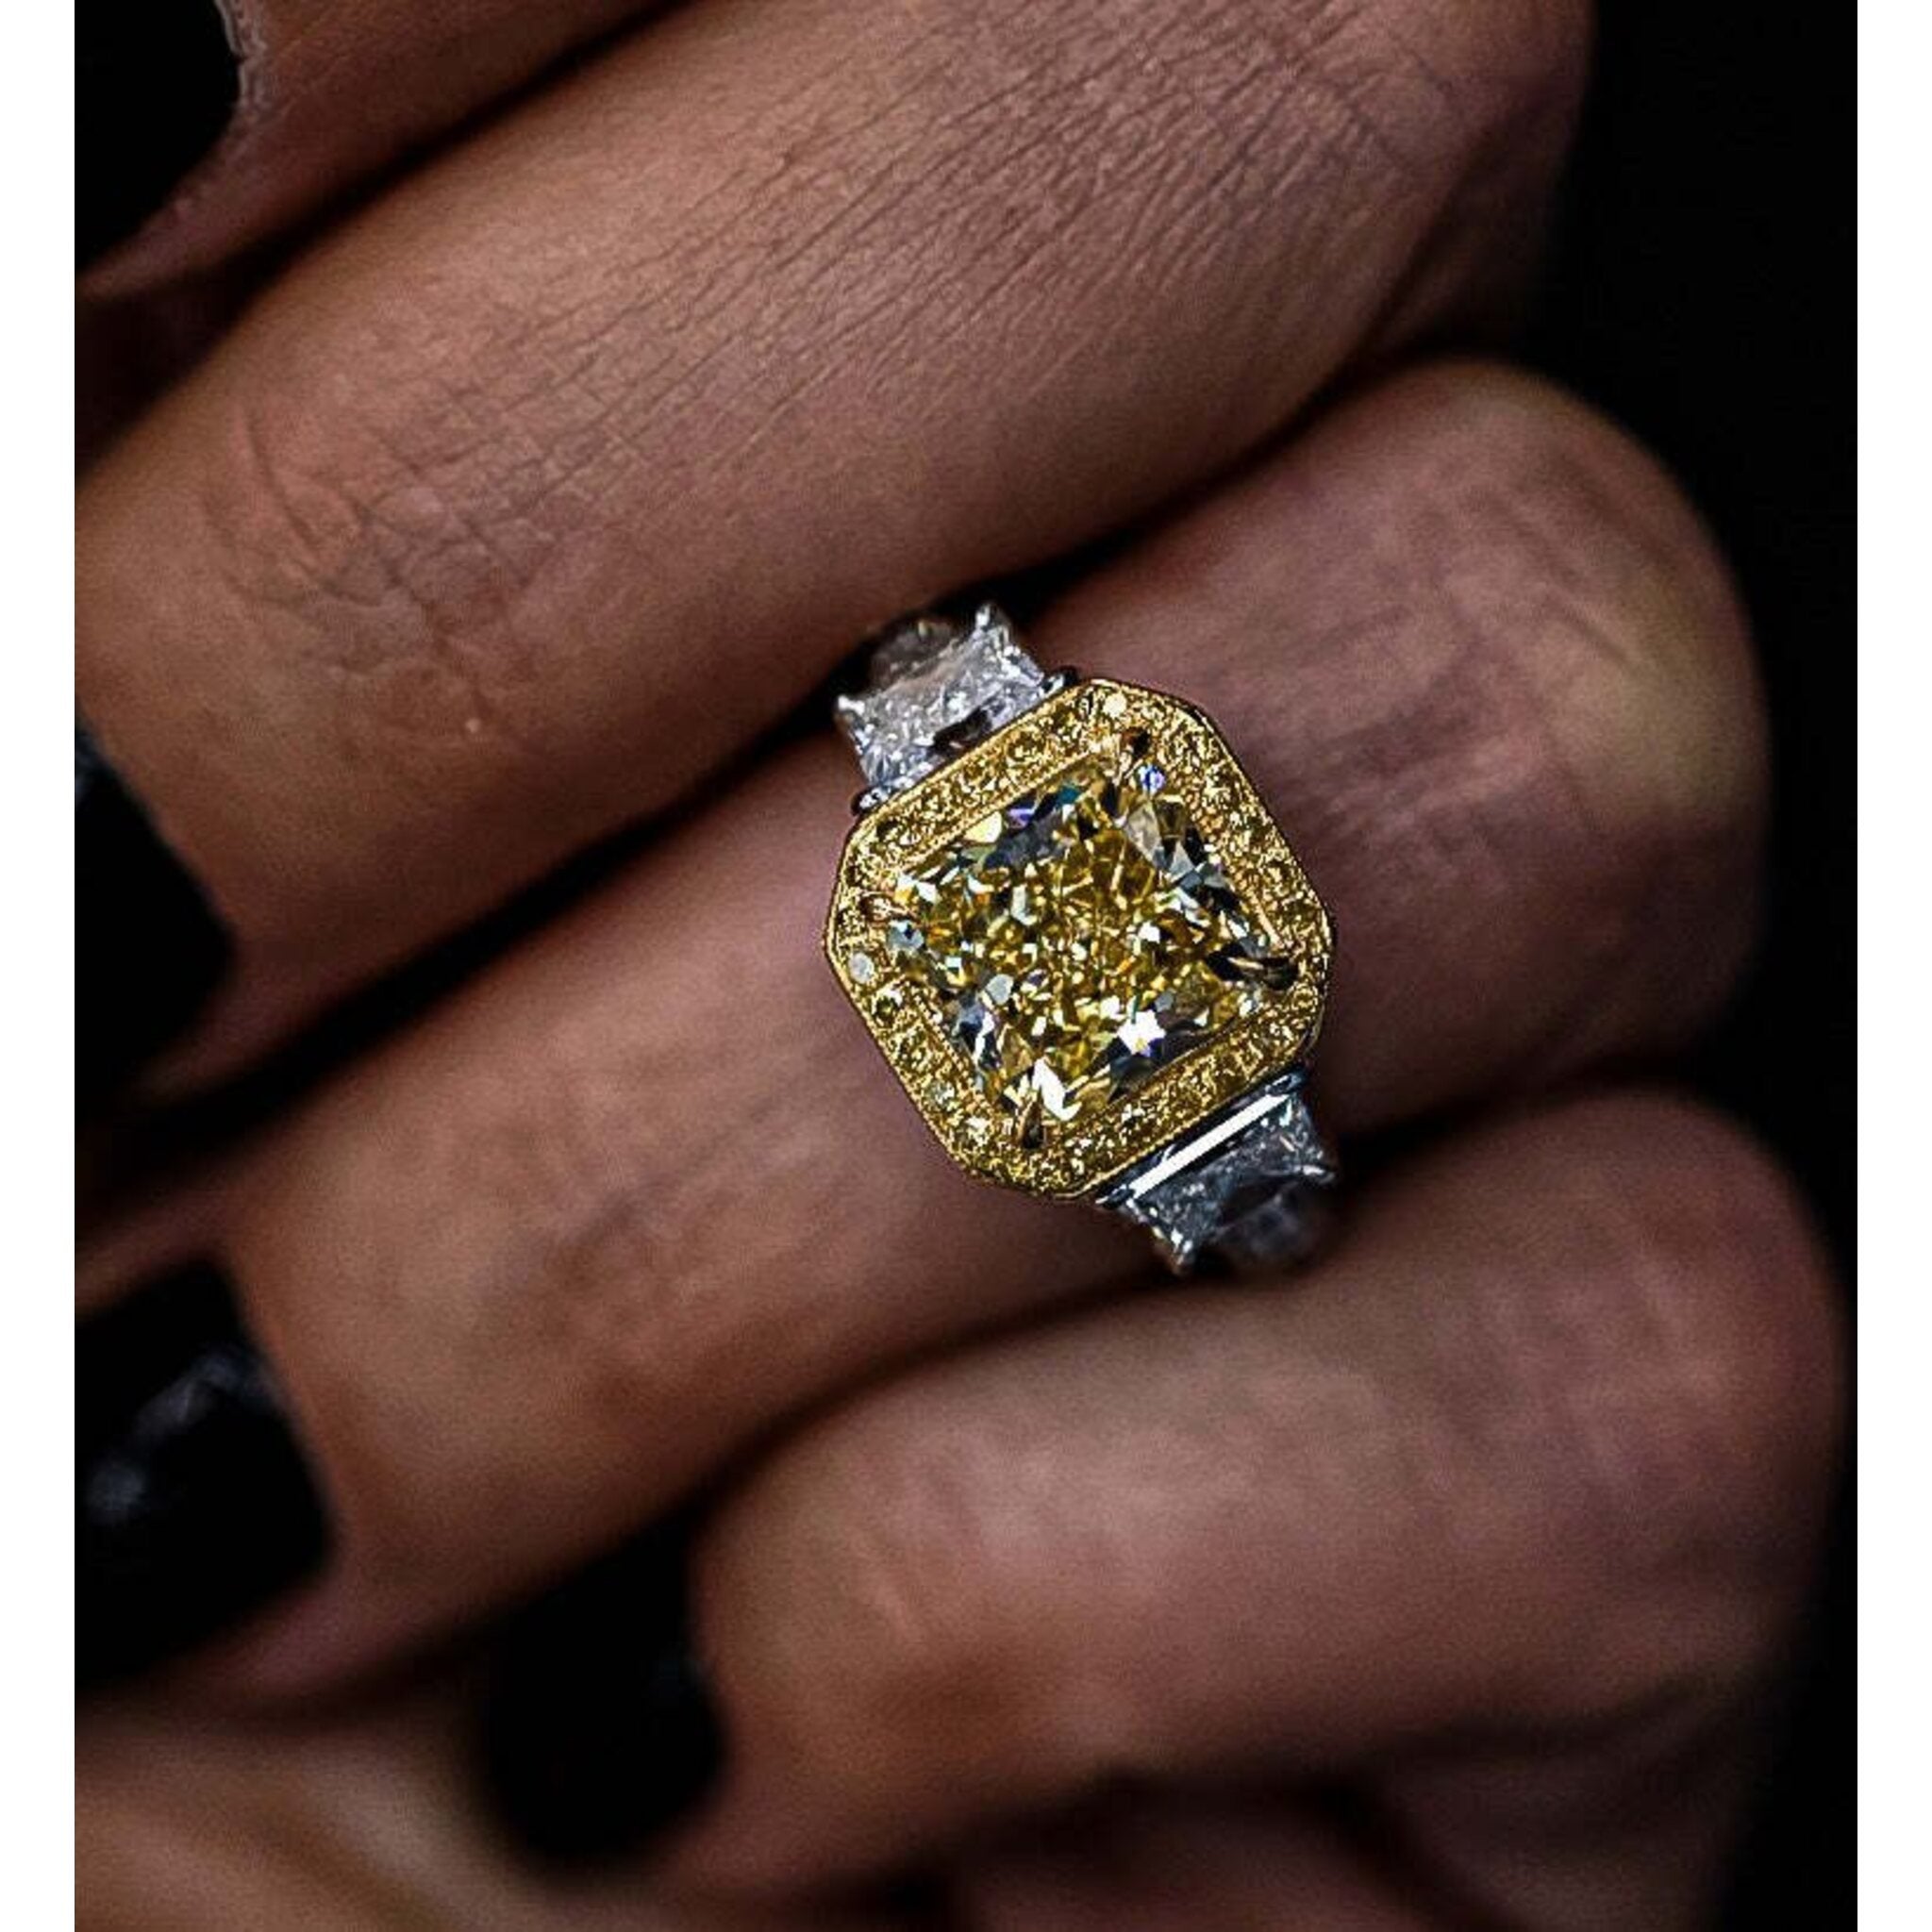 3 Carat Radiant Cut Fancy Intense Yellow Diamond Engagement Ring